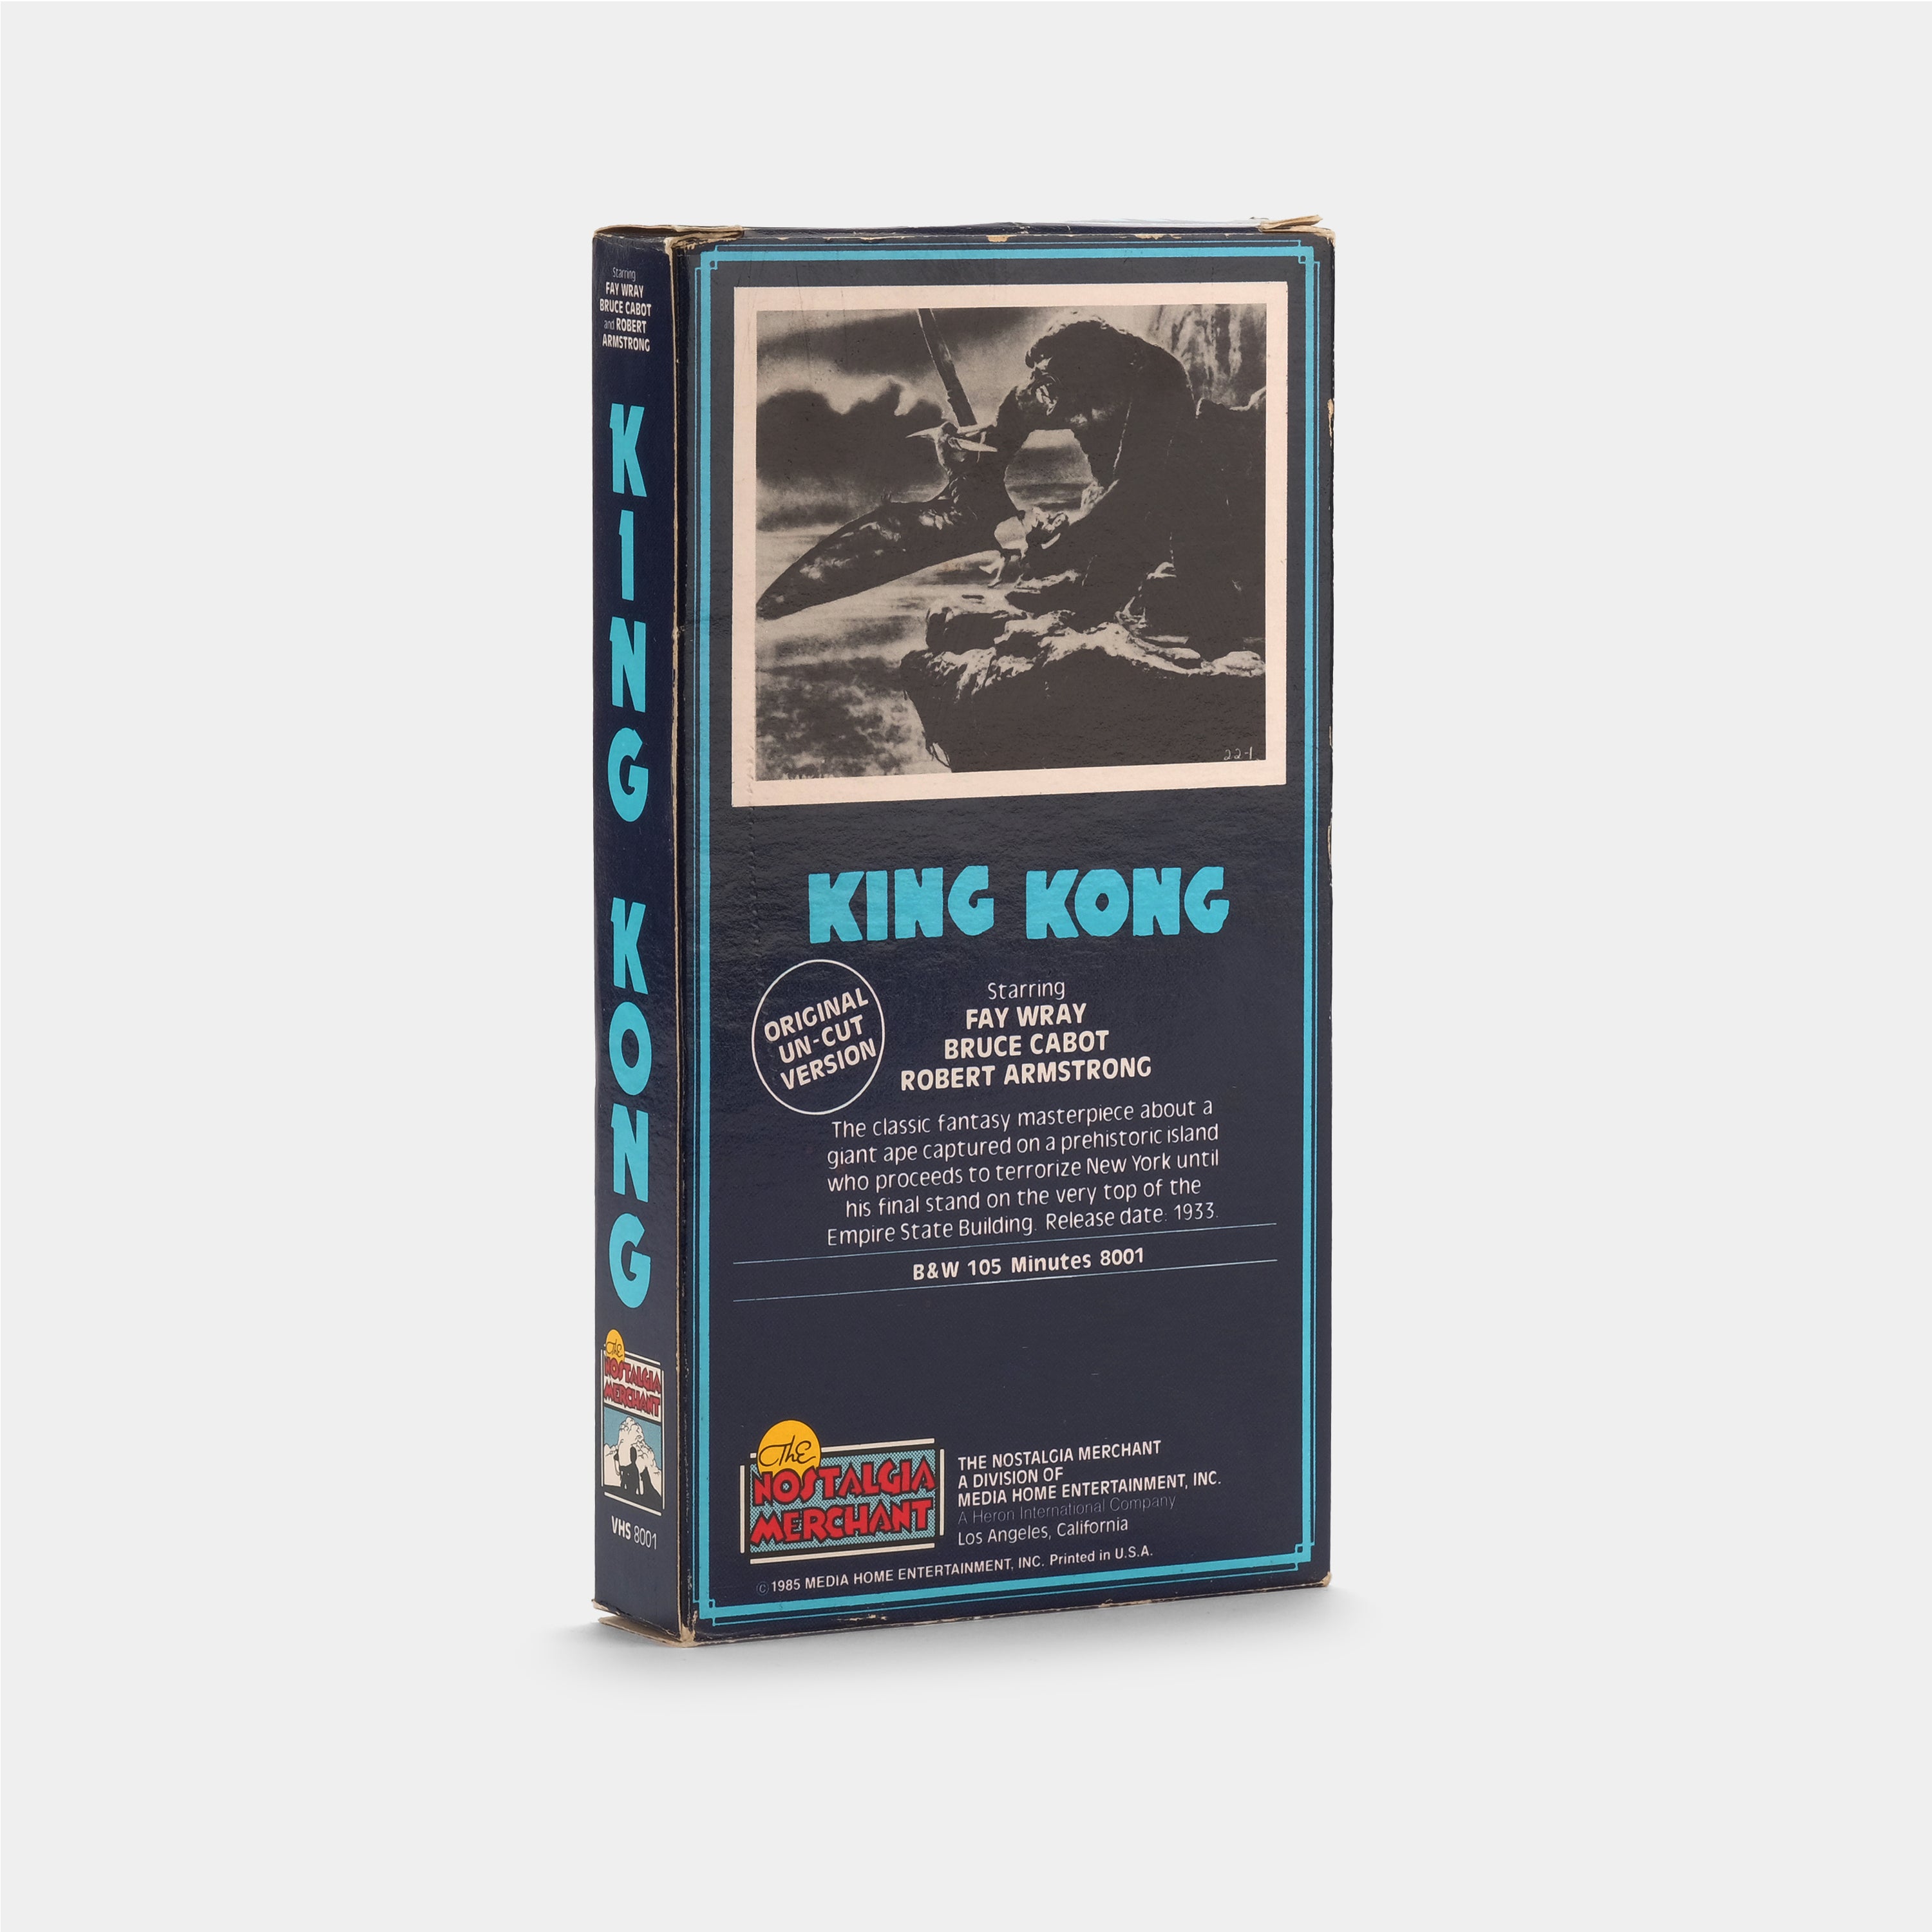 King Kong VHS Tape